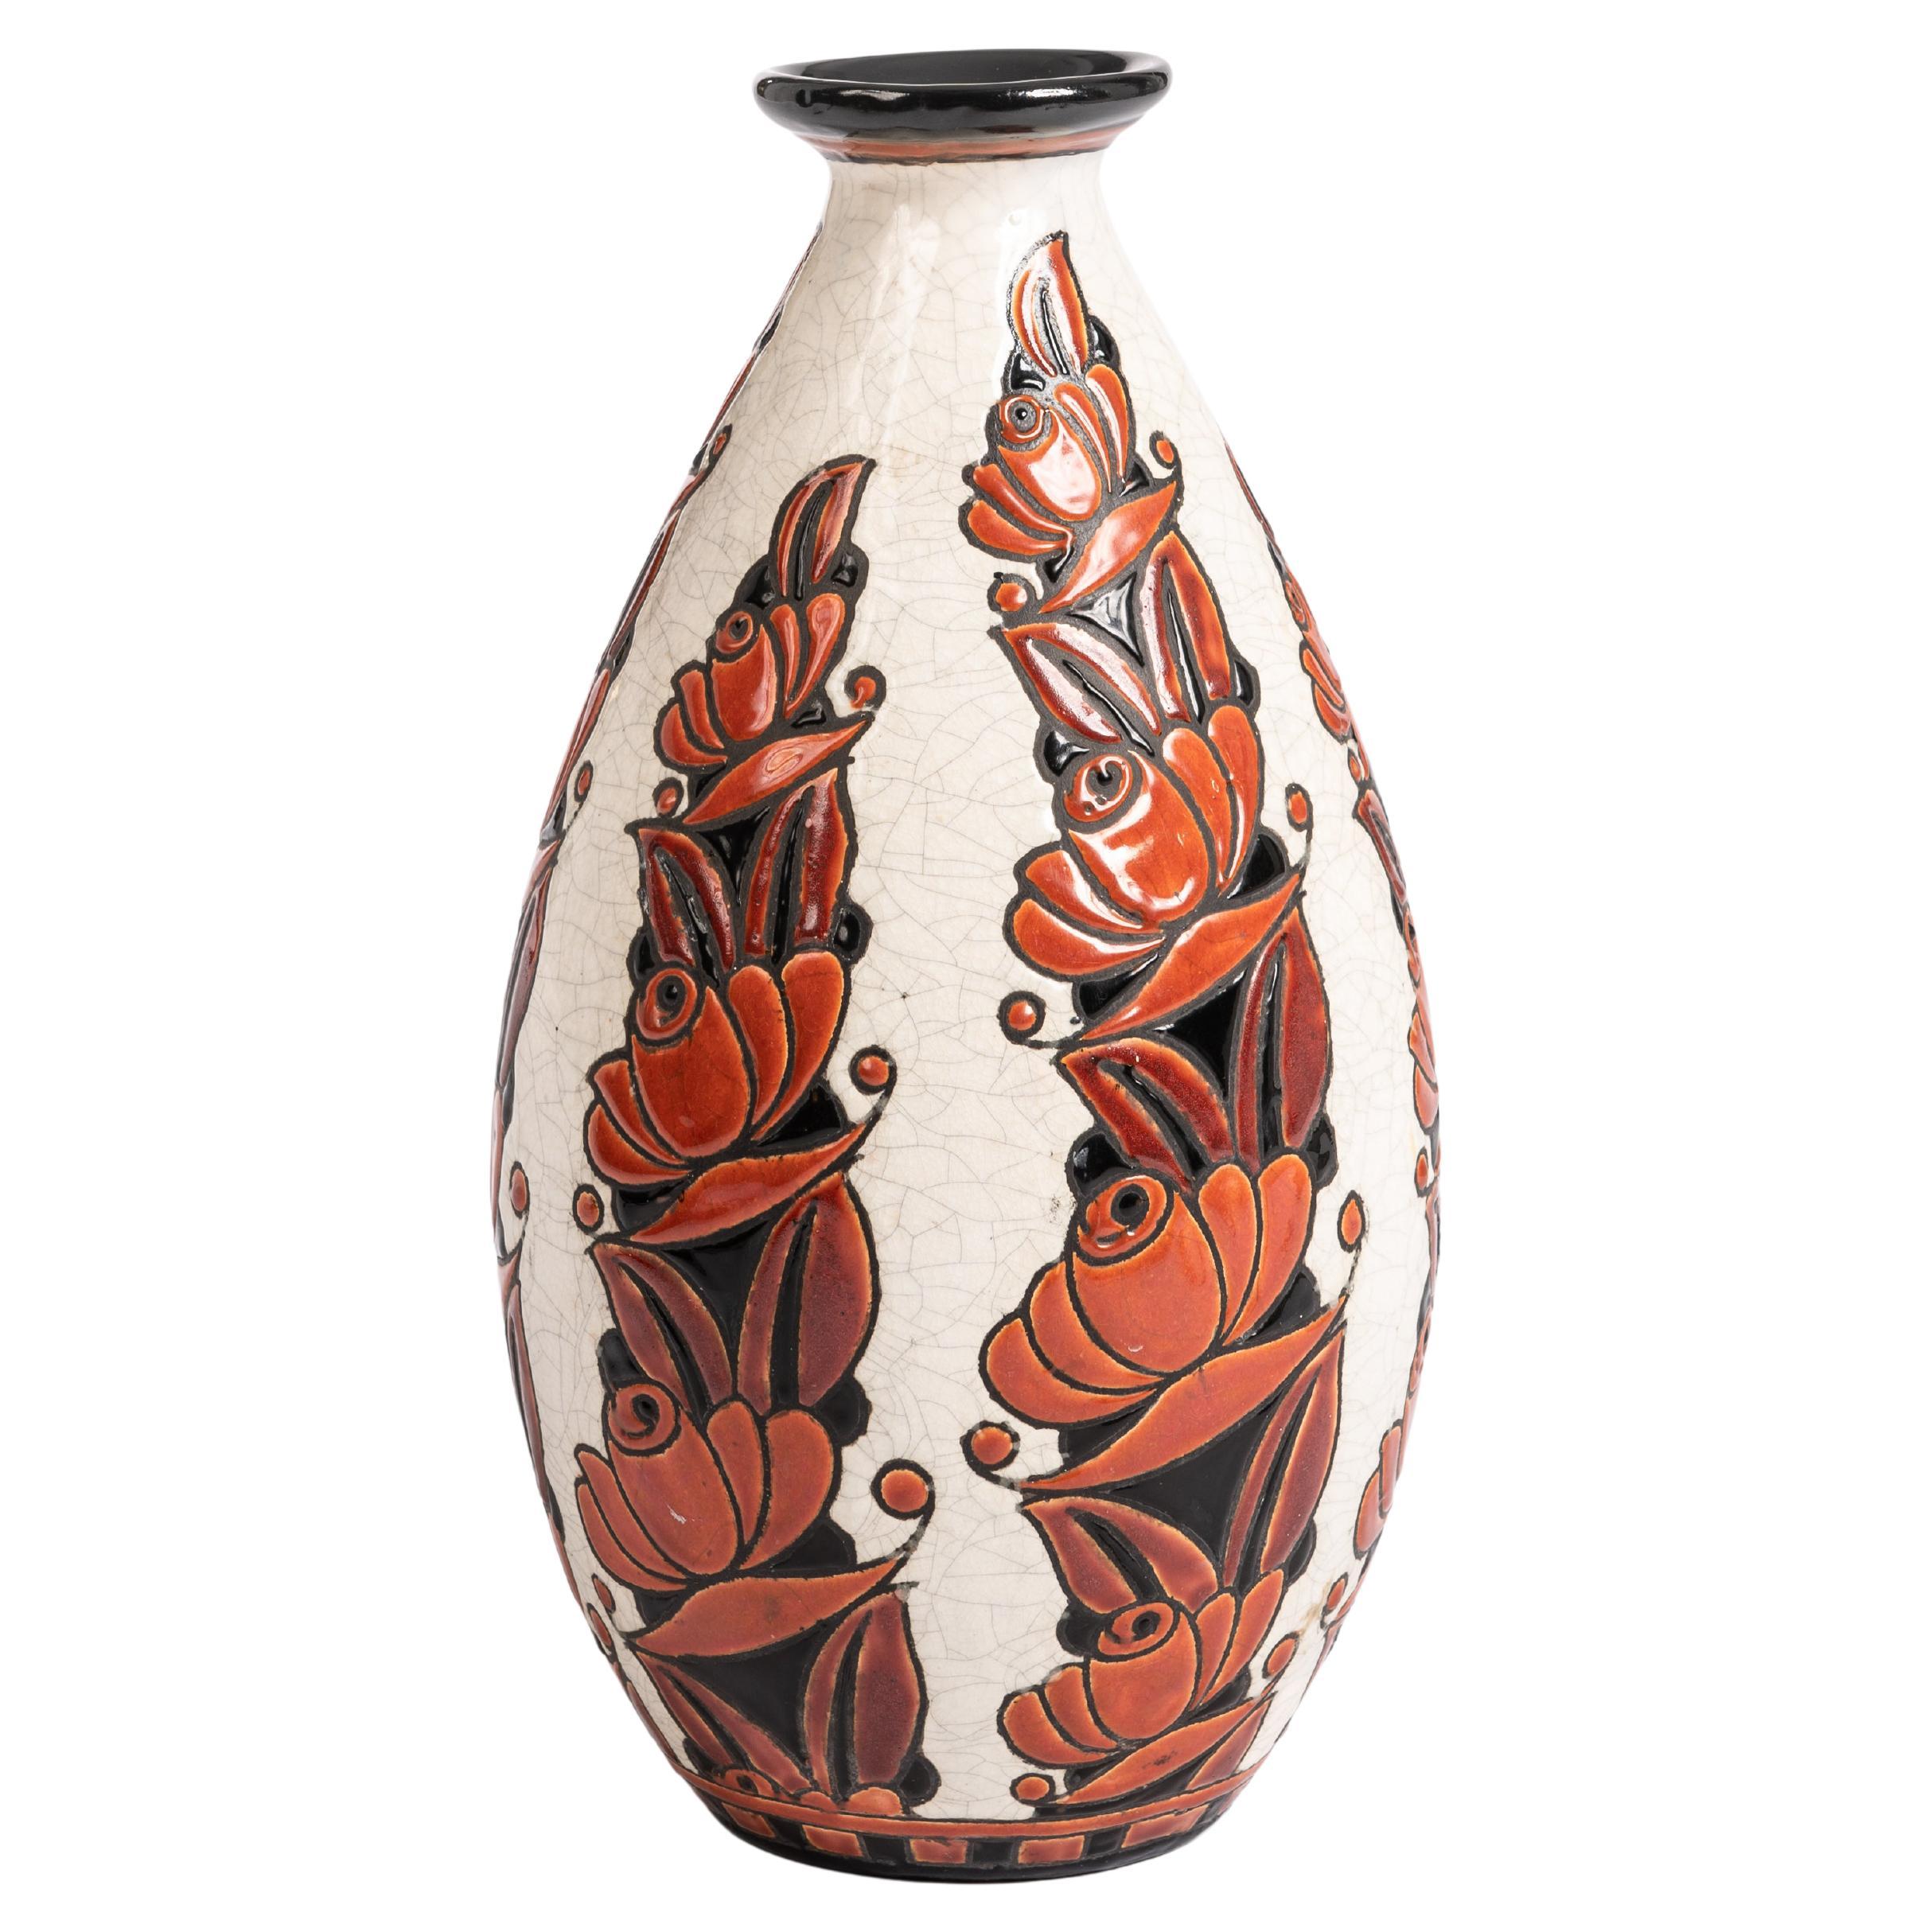 Large Art Deco Ceramic Vase in Orange-Red-Black-Beige by Boch Frères Belgium 30s